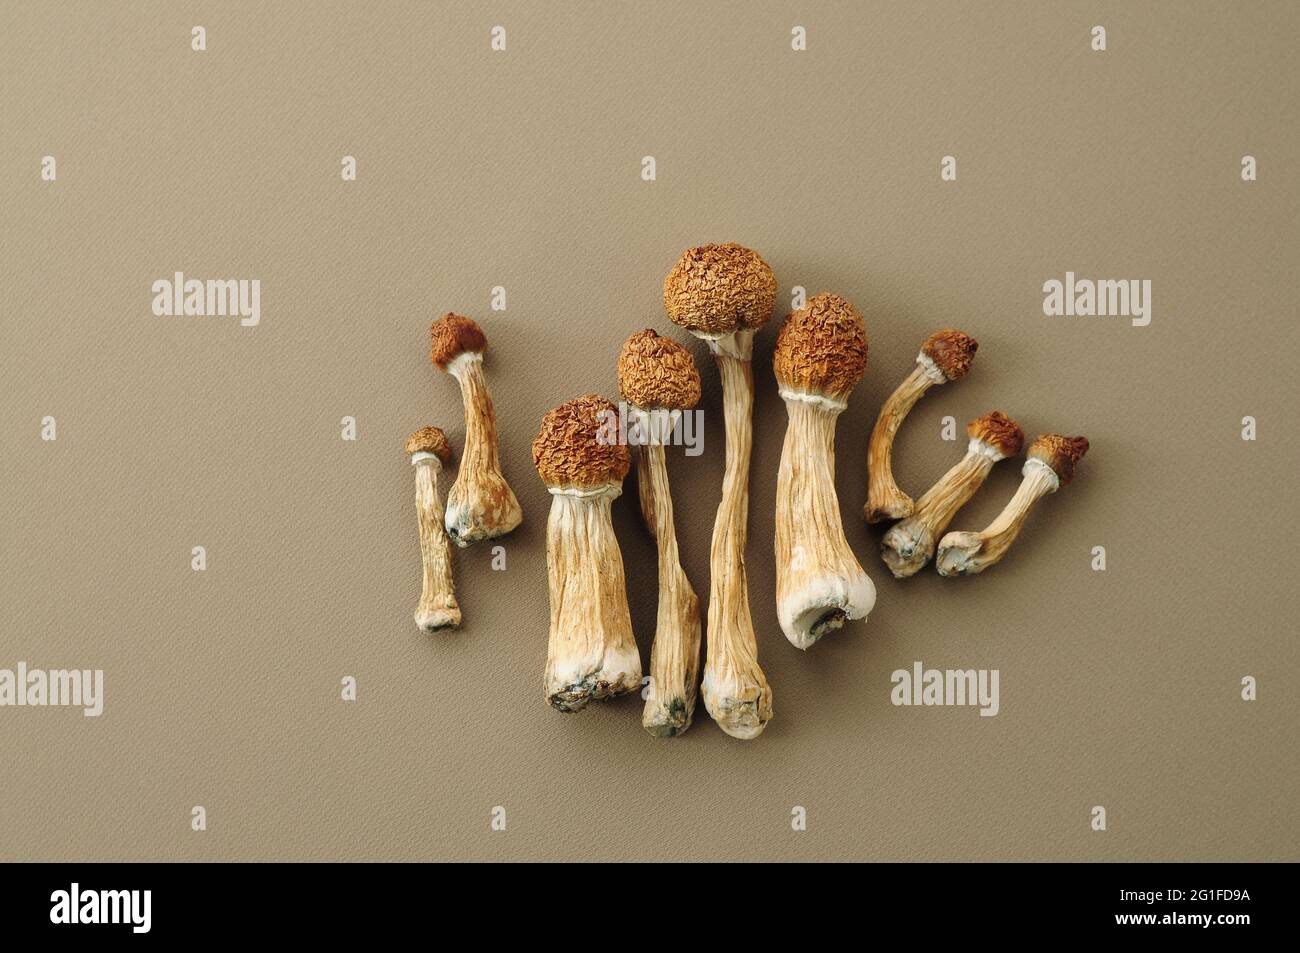 Psychedelic magic mushroom Golden Teacher. Dried psilocybin mushrooms on brown background. Micro-dosing concept. Stock Photo